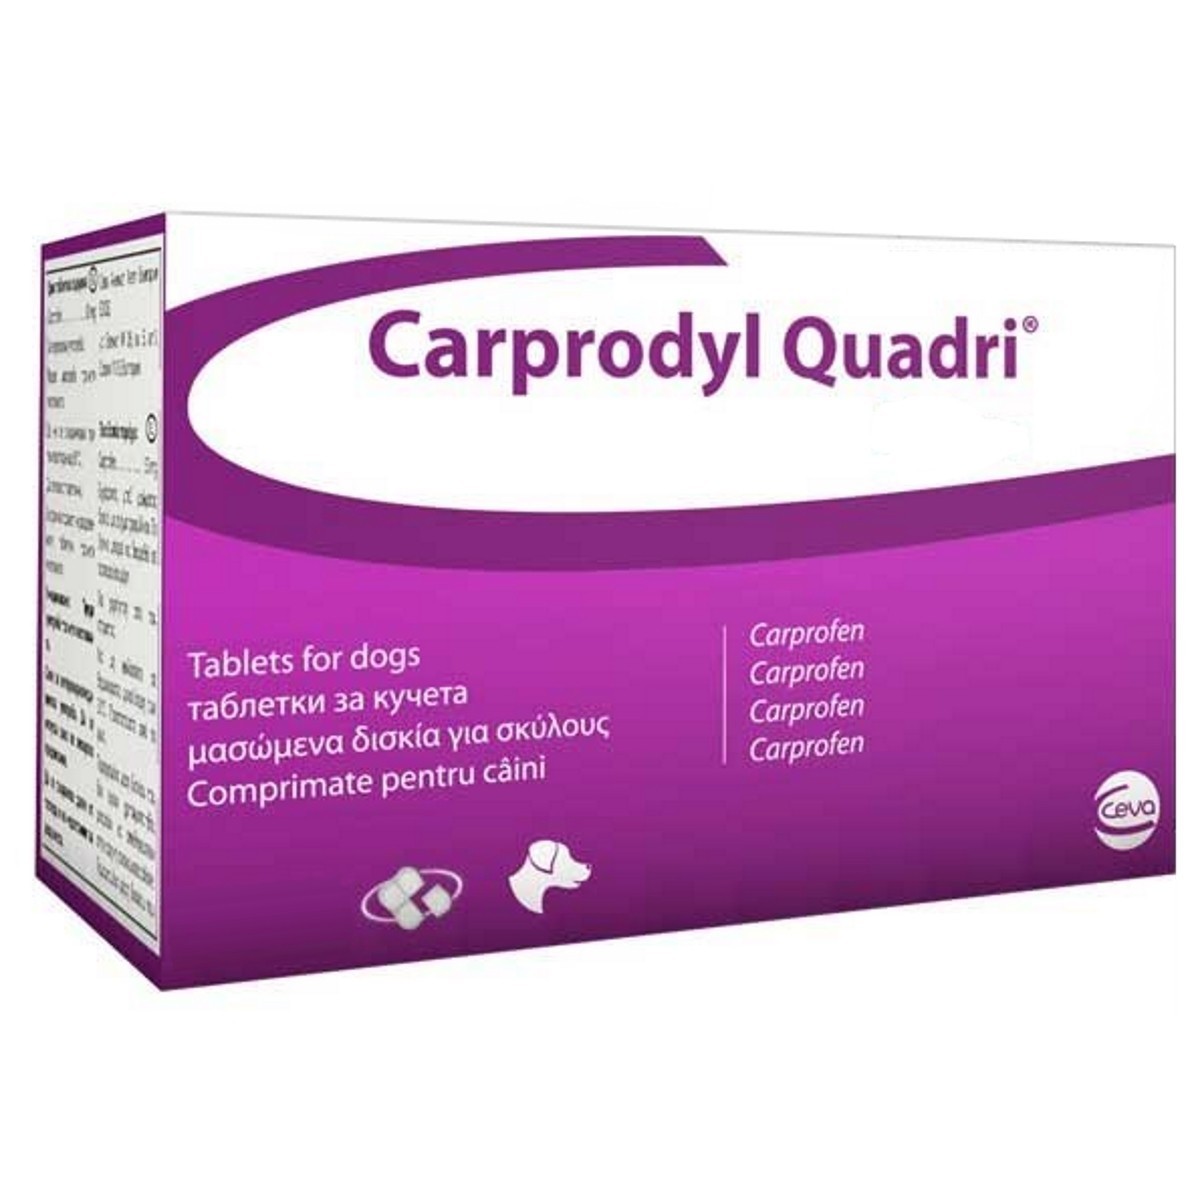 Carprodyl Quadri 120mg Tablet - From £0.78